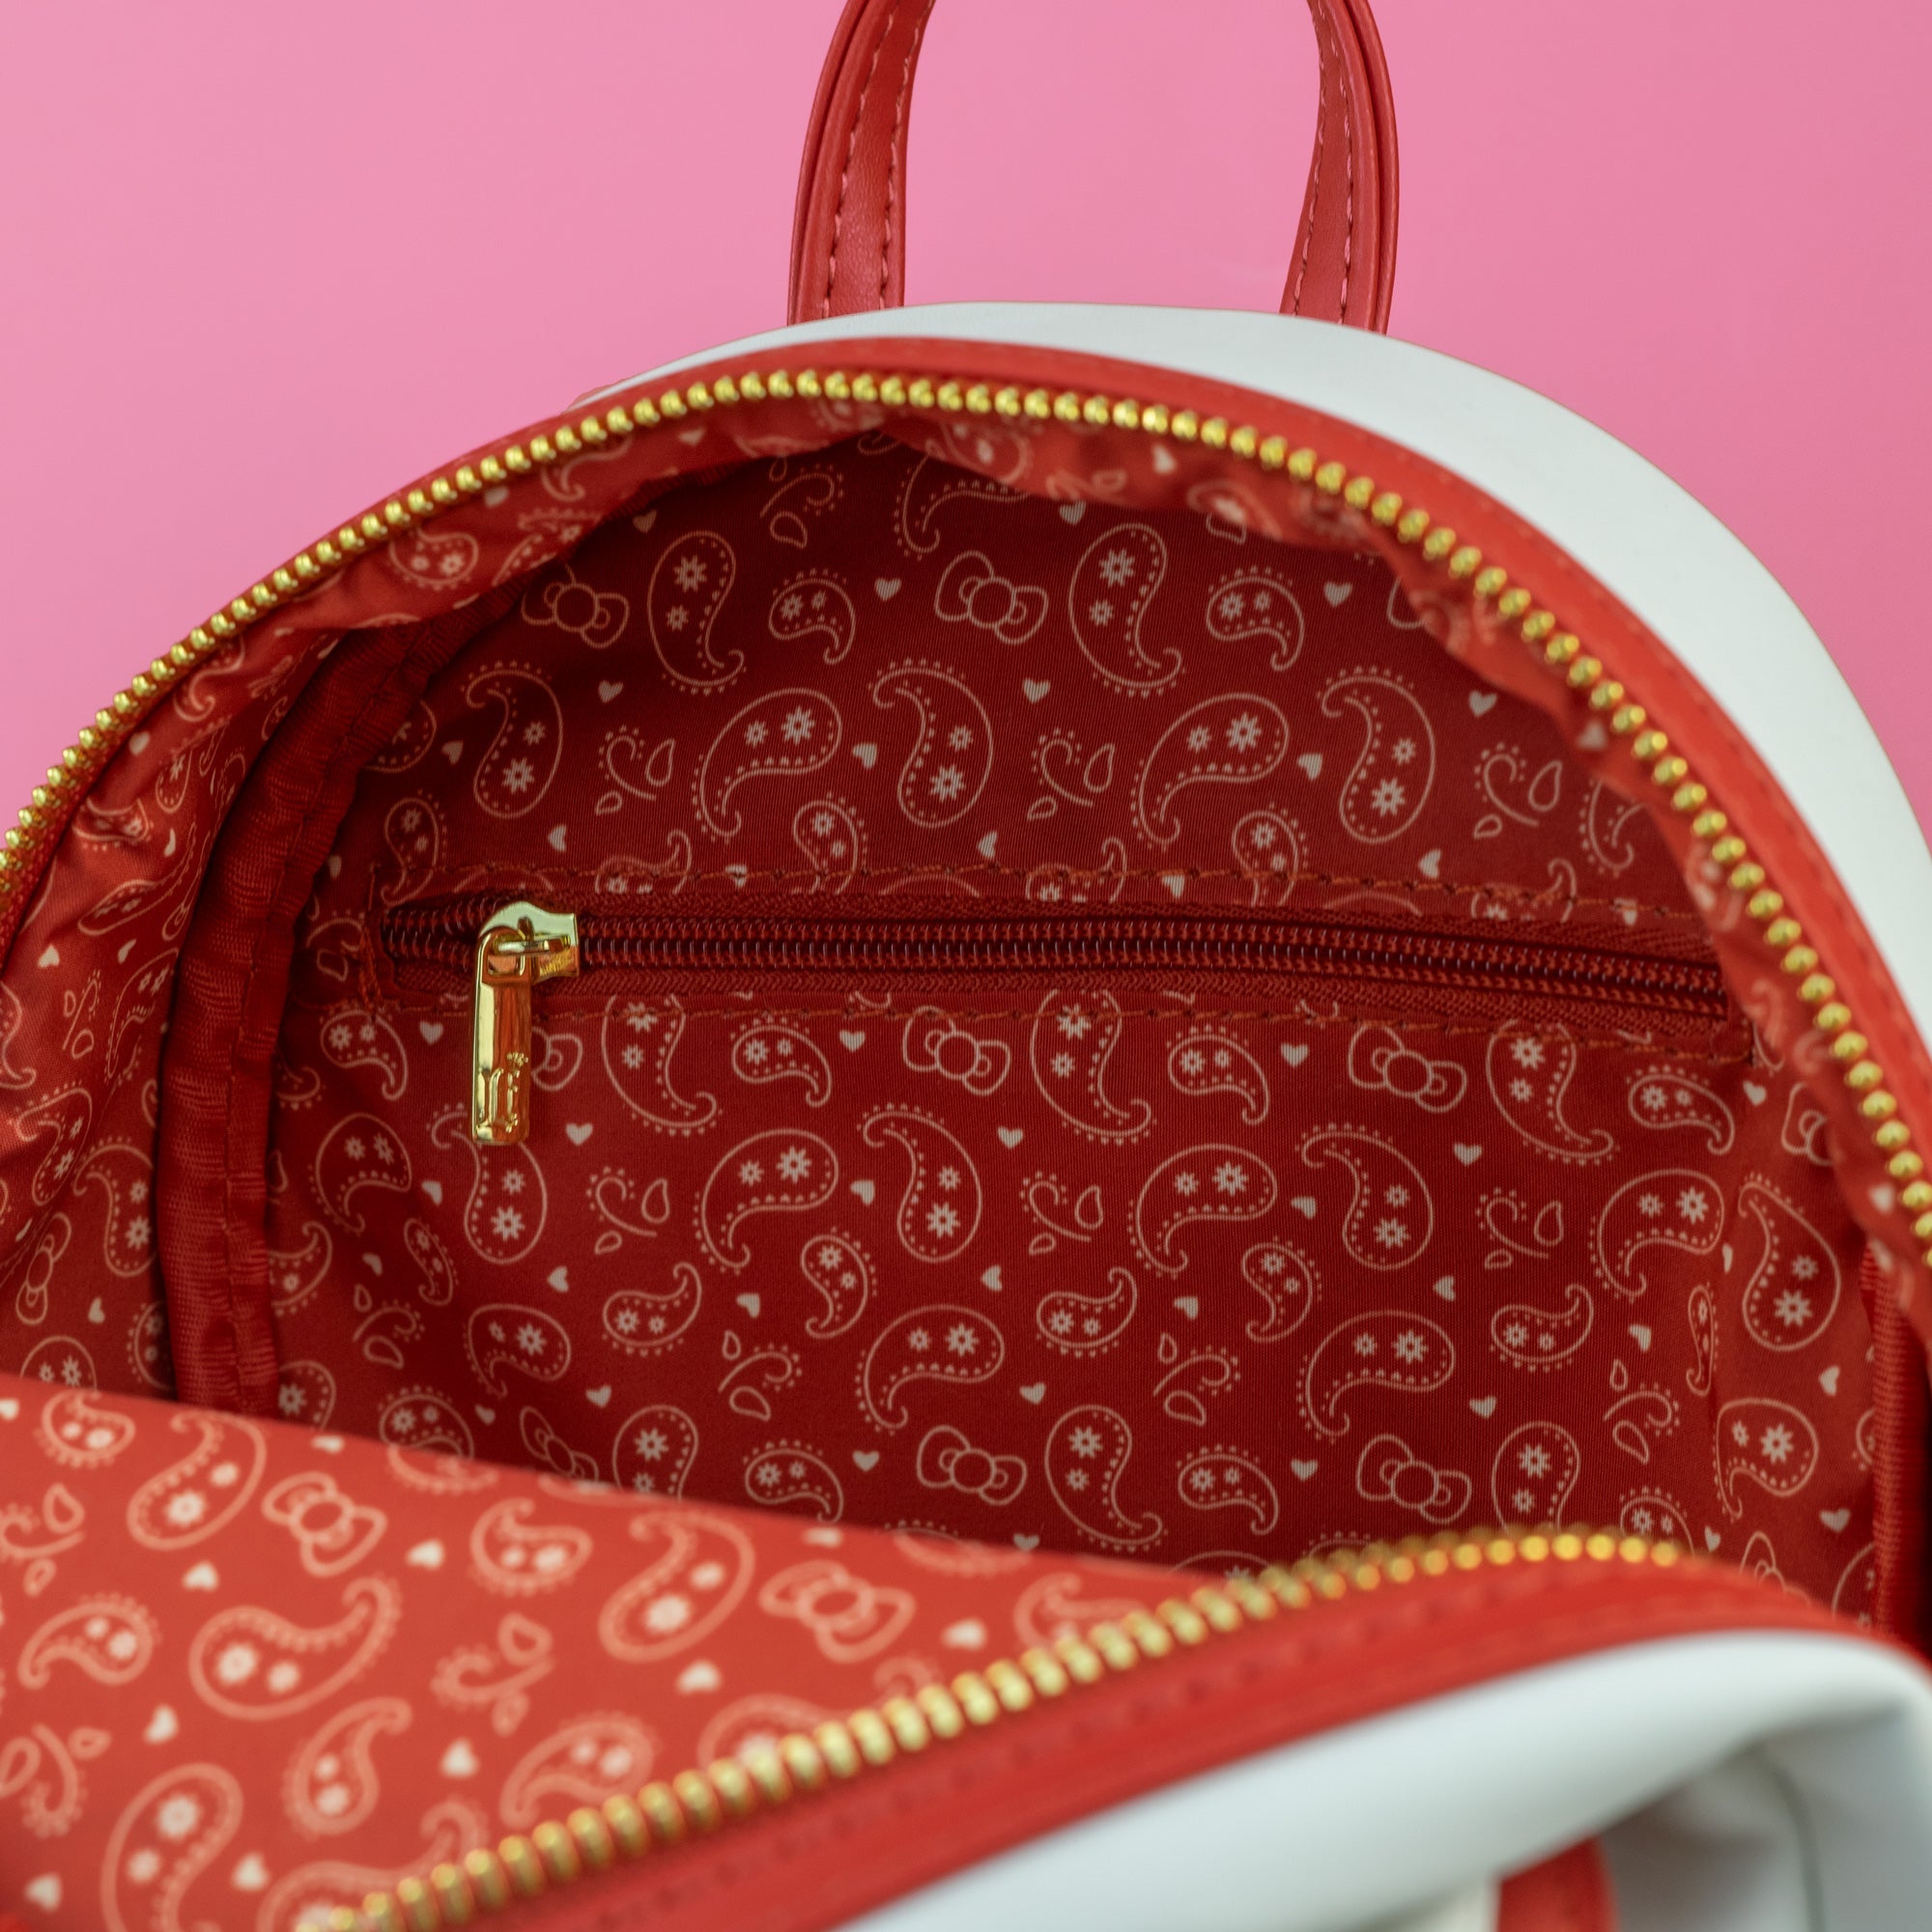 Loungefly x Sanrio Hello Kitty Western Cosplay Mini Backpack - GeekCore